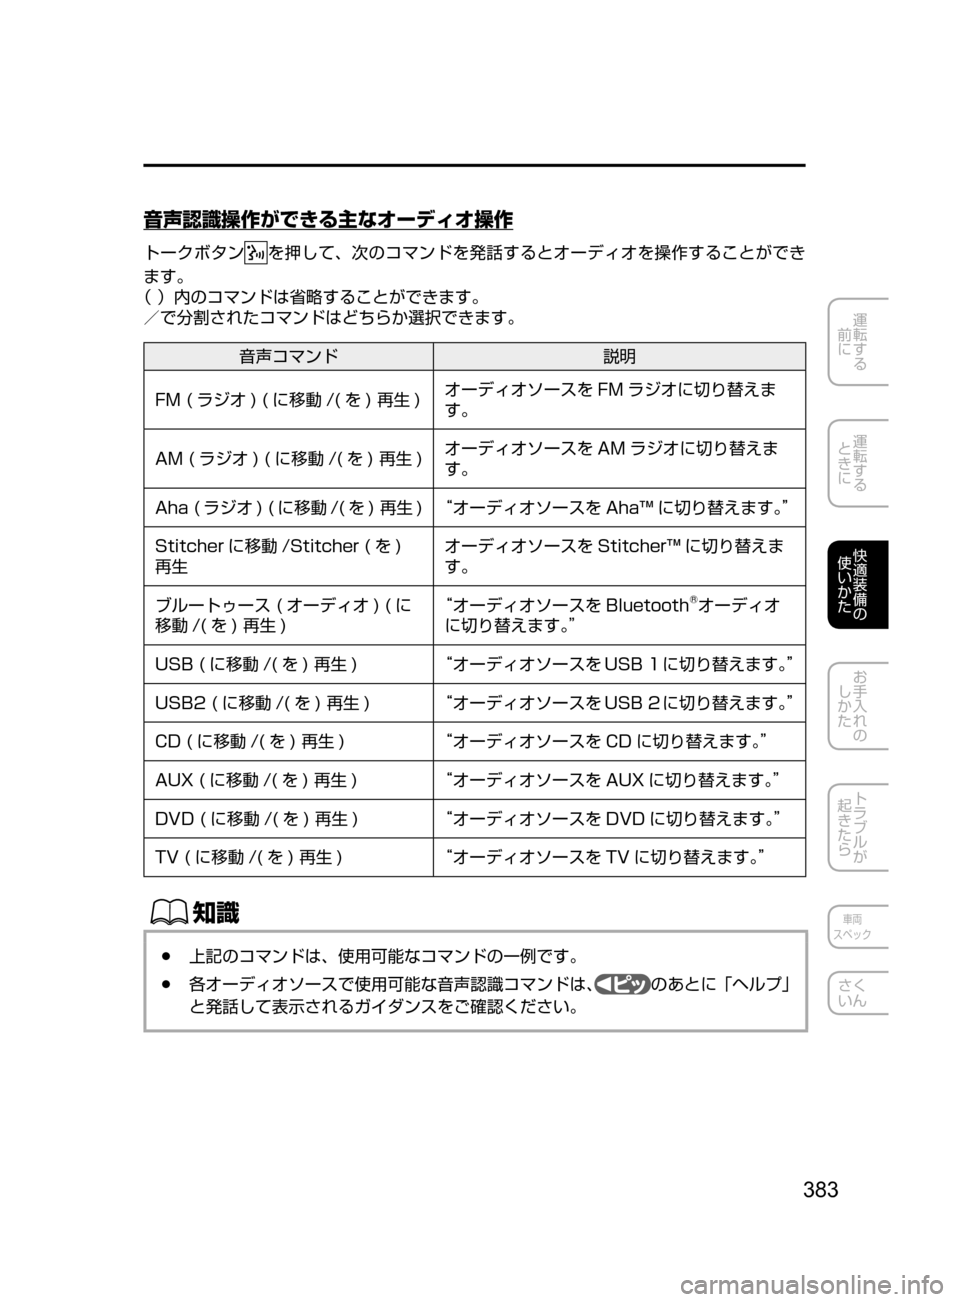 MAZDA MODEL ATENZA 2016  アテンザ｜取扱説明書 (in Japanese) 383
運転する
﻿﻿
前に
運転する
﻿﻿
ときに
快適装備の
使いかた
お手入れの
しかた
トラブルが
起きたら
車両
スペック
さく
いん
音声認識操作が